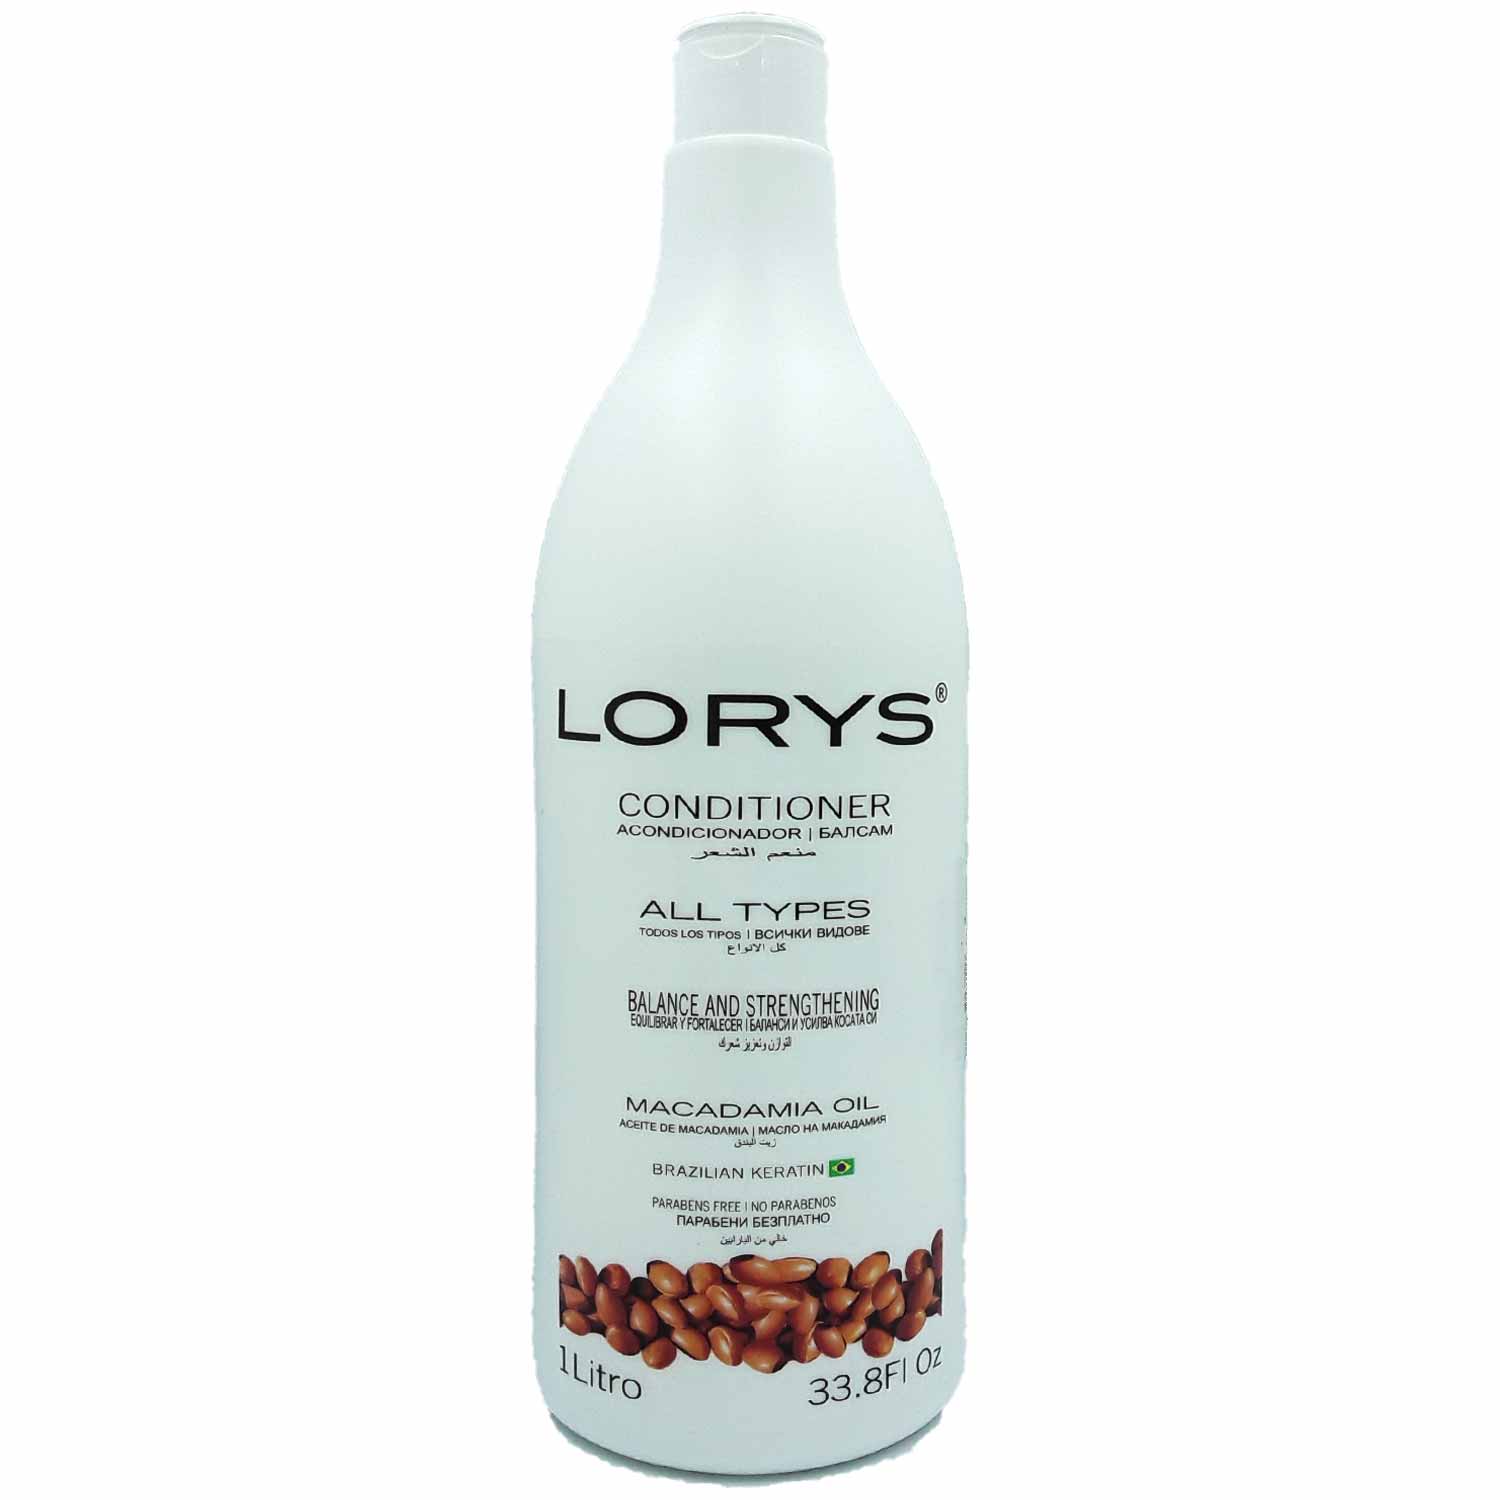 Lorys Macadamia Conditioner 1 Liter